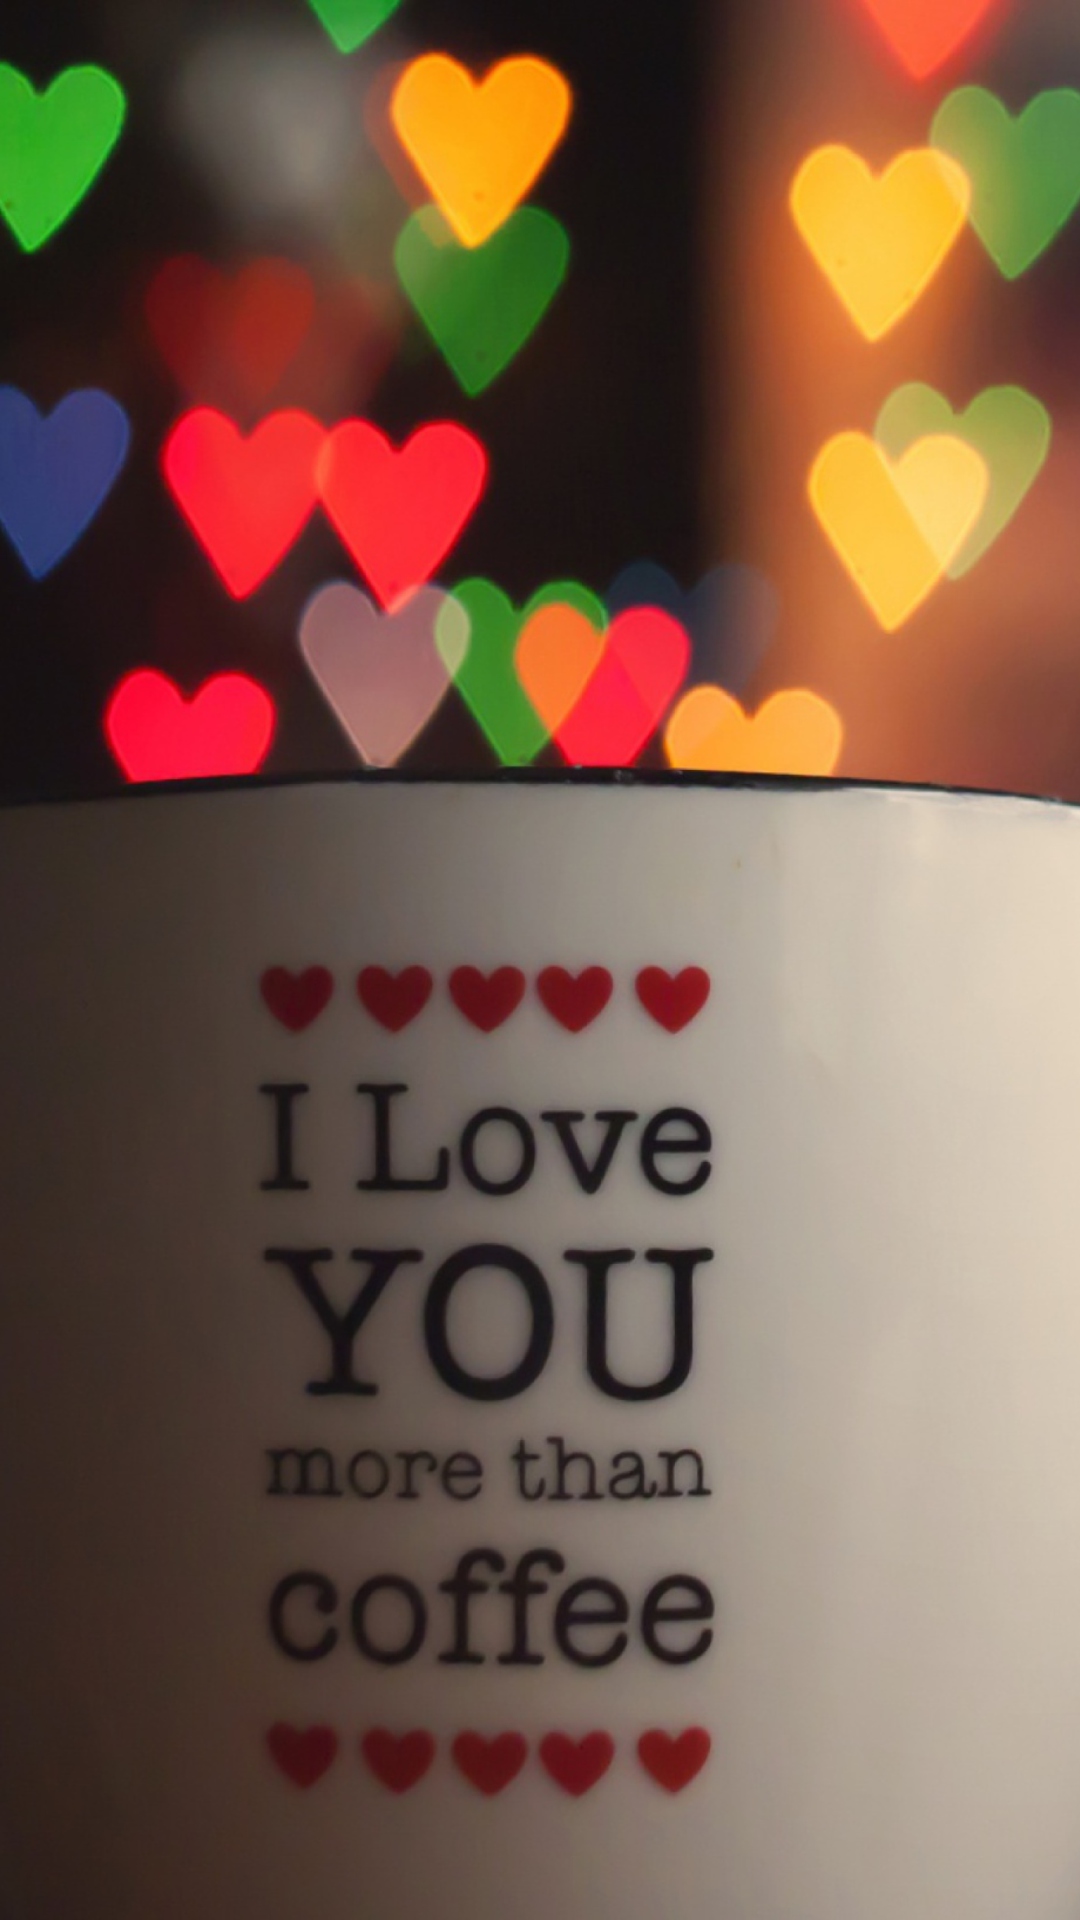 I Love You More Than Coffee wallpaper 1080x1920